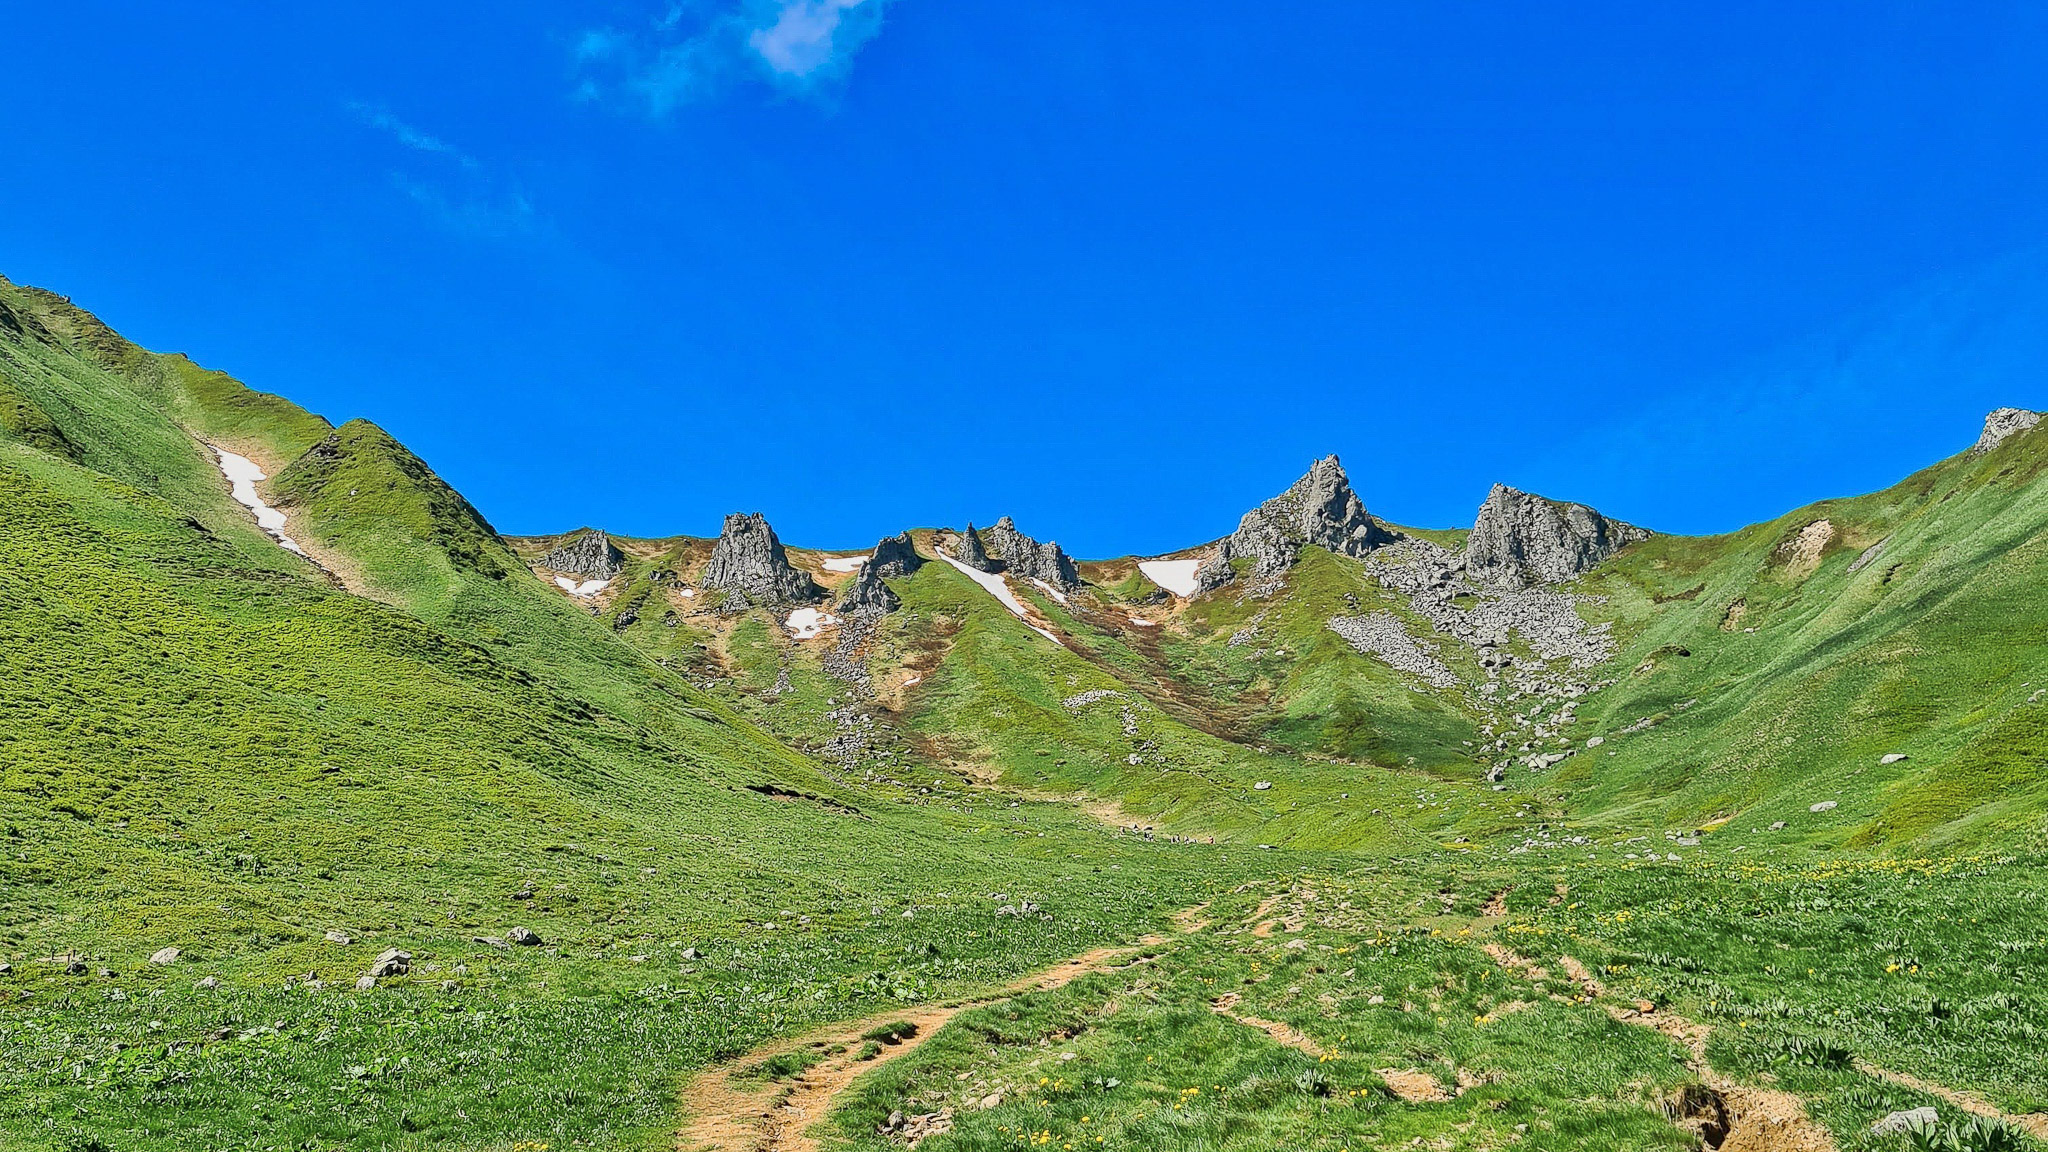 The Valley of Val de Courre, ideal for reaching the Puy de Sancy